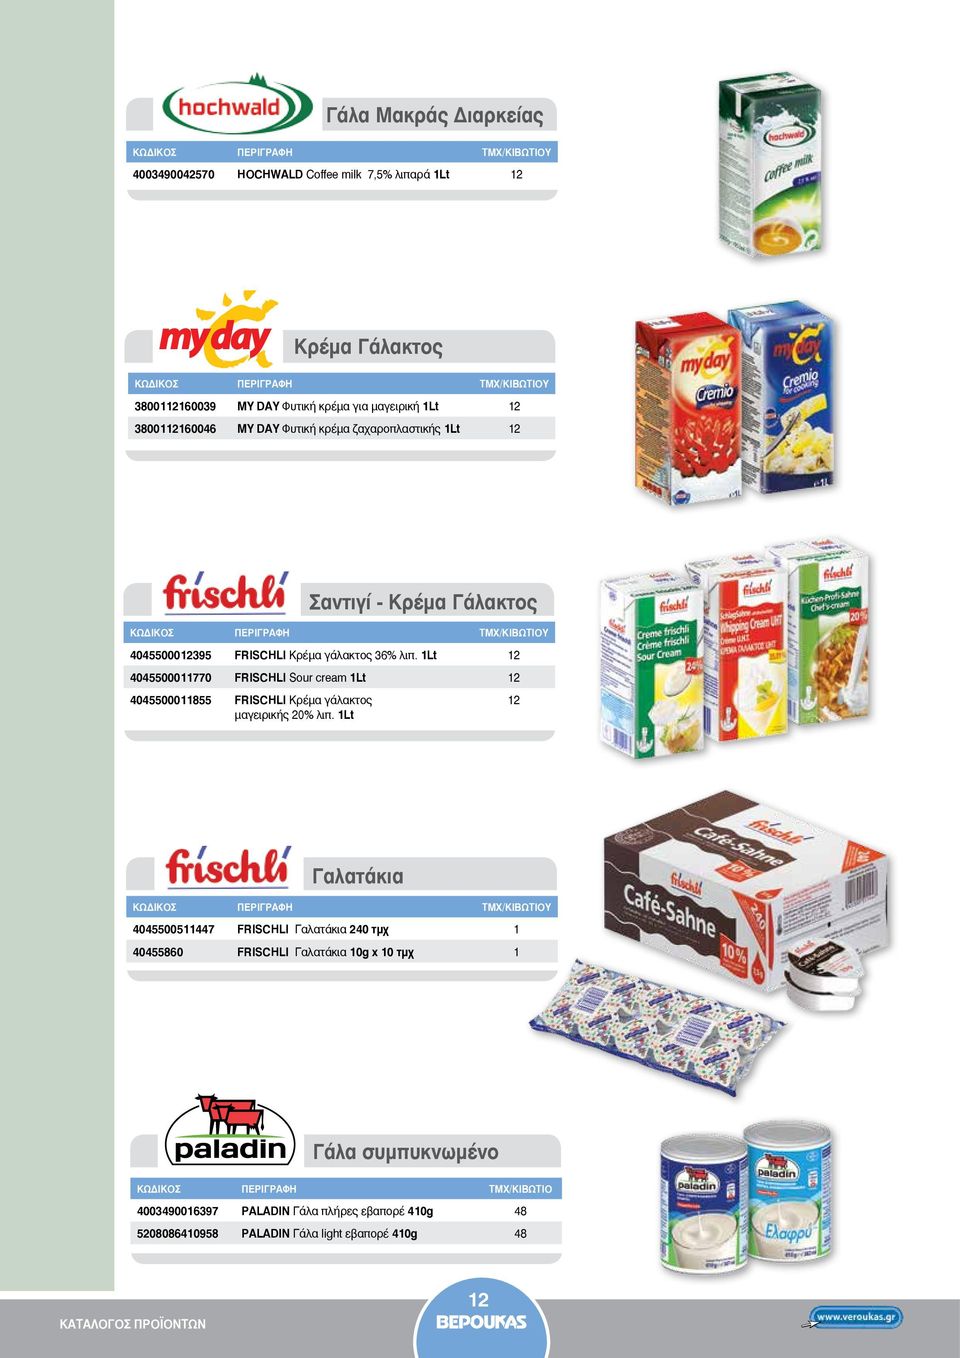 1Lt 12 4045500011770 Frischli sour cream 1Lt 12 4045500011855 Frischli κρέμα γάλακτος μαγειρικής 20% λιπ.